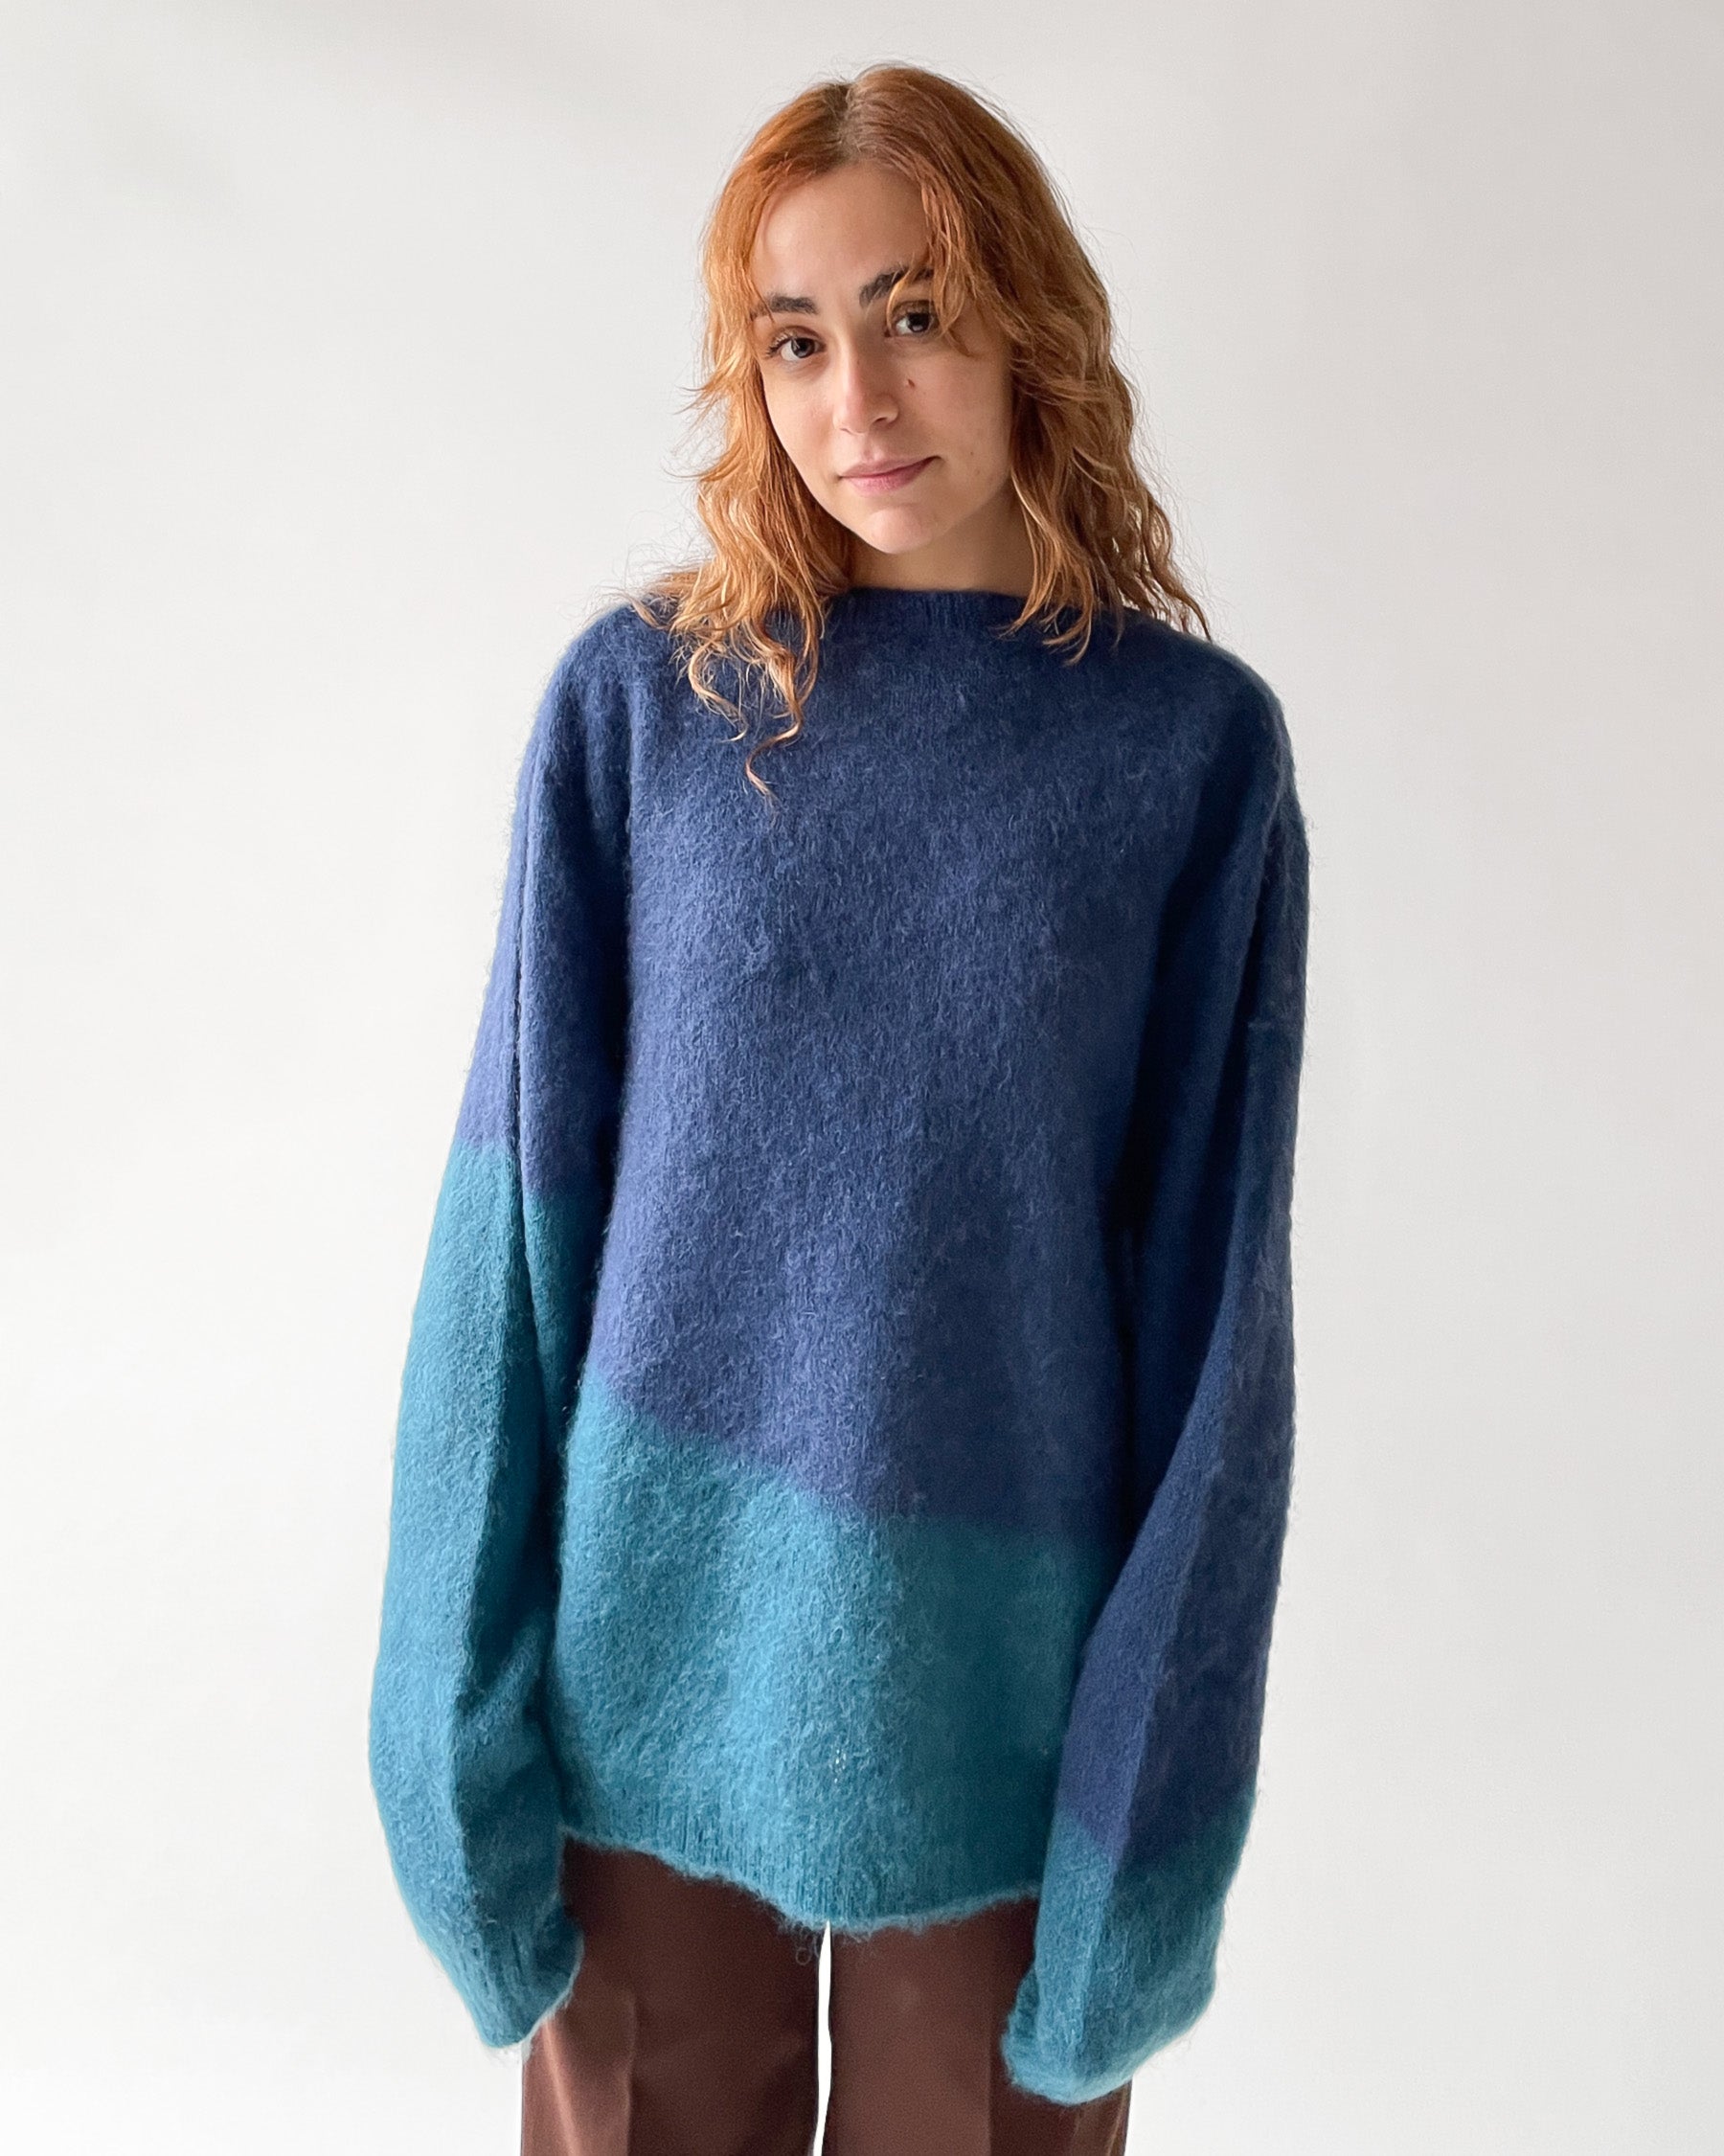 studiolab404.com] Art Inspired Mohair Sweater Unaltd - 1